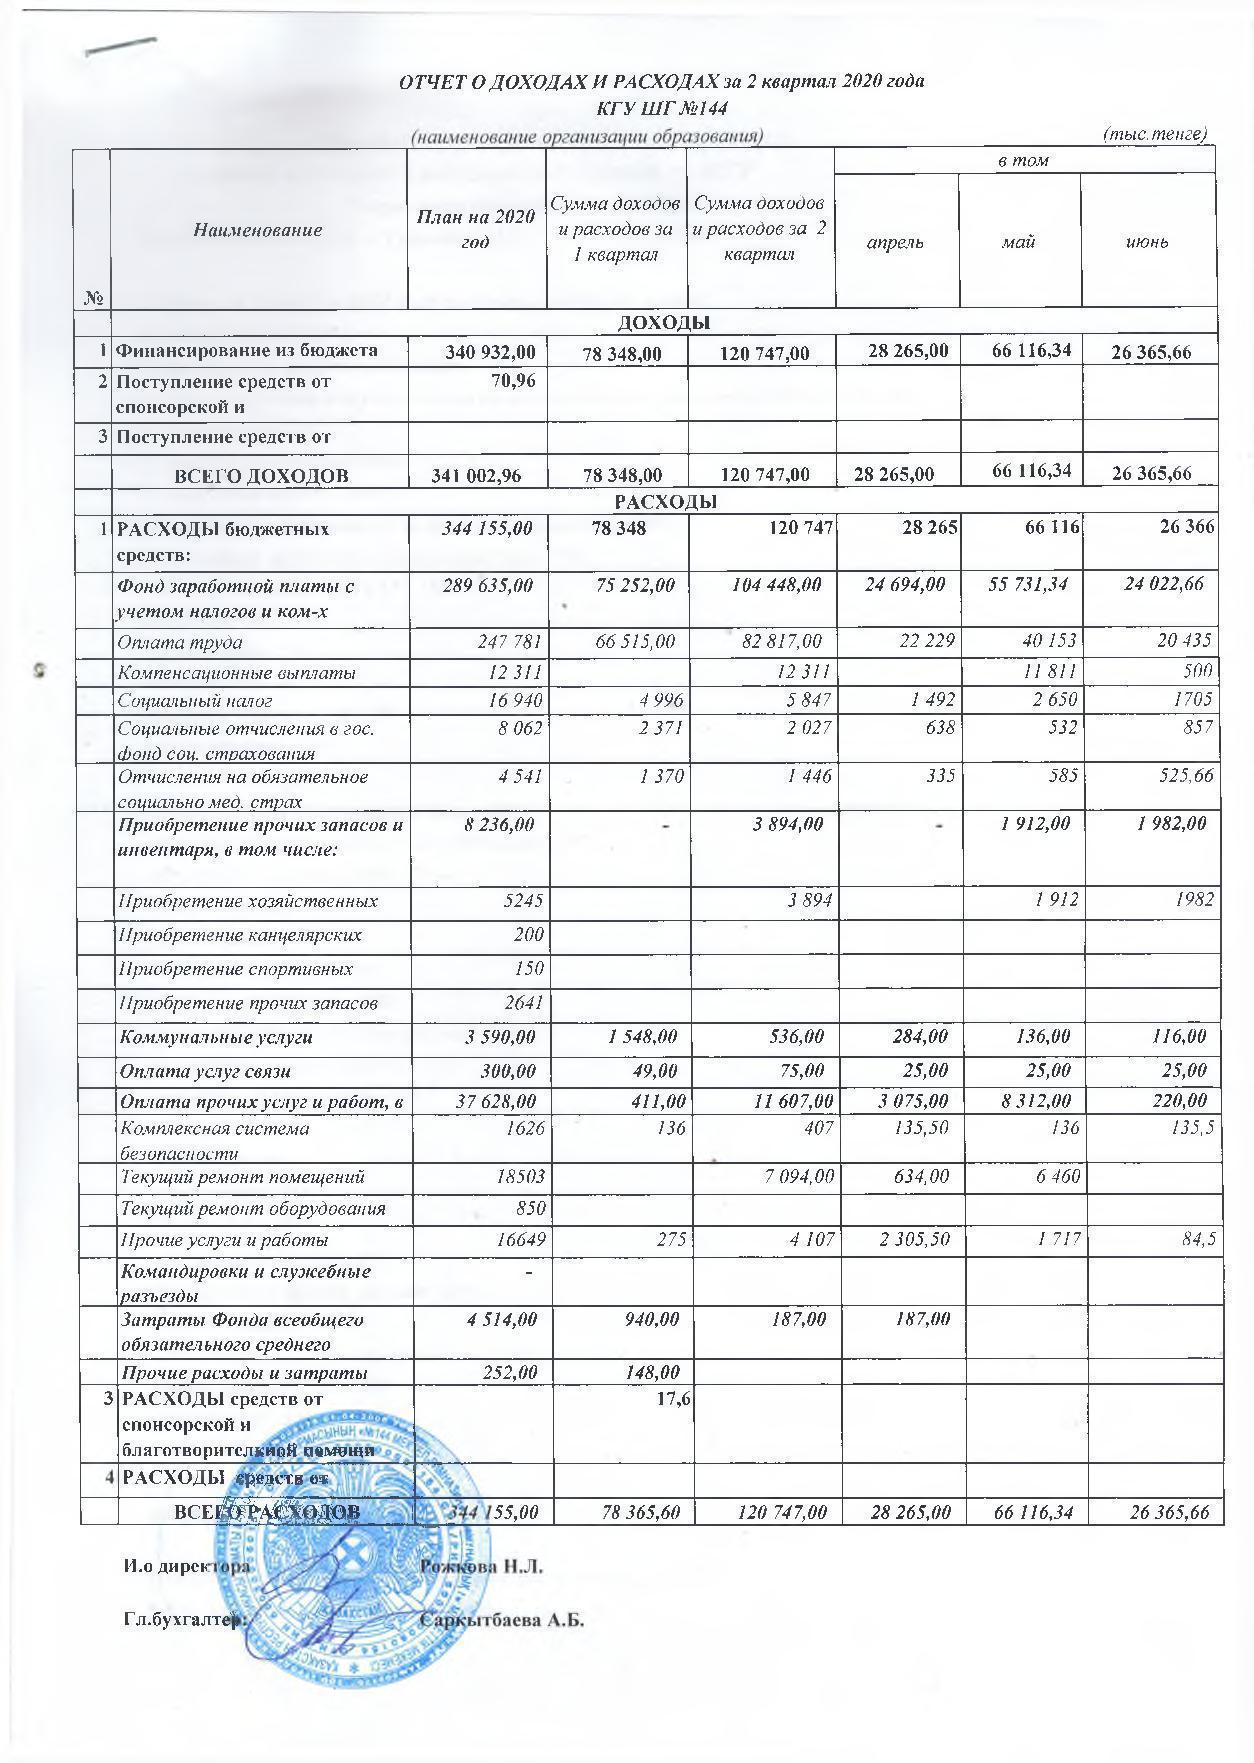 Отчет о доходах и расходах за 2 кв 2020